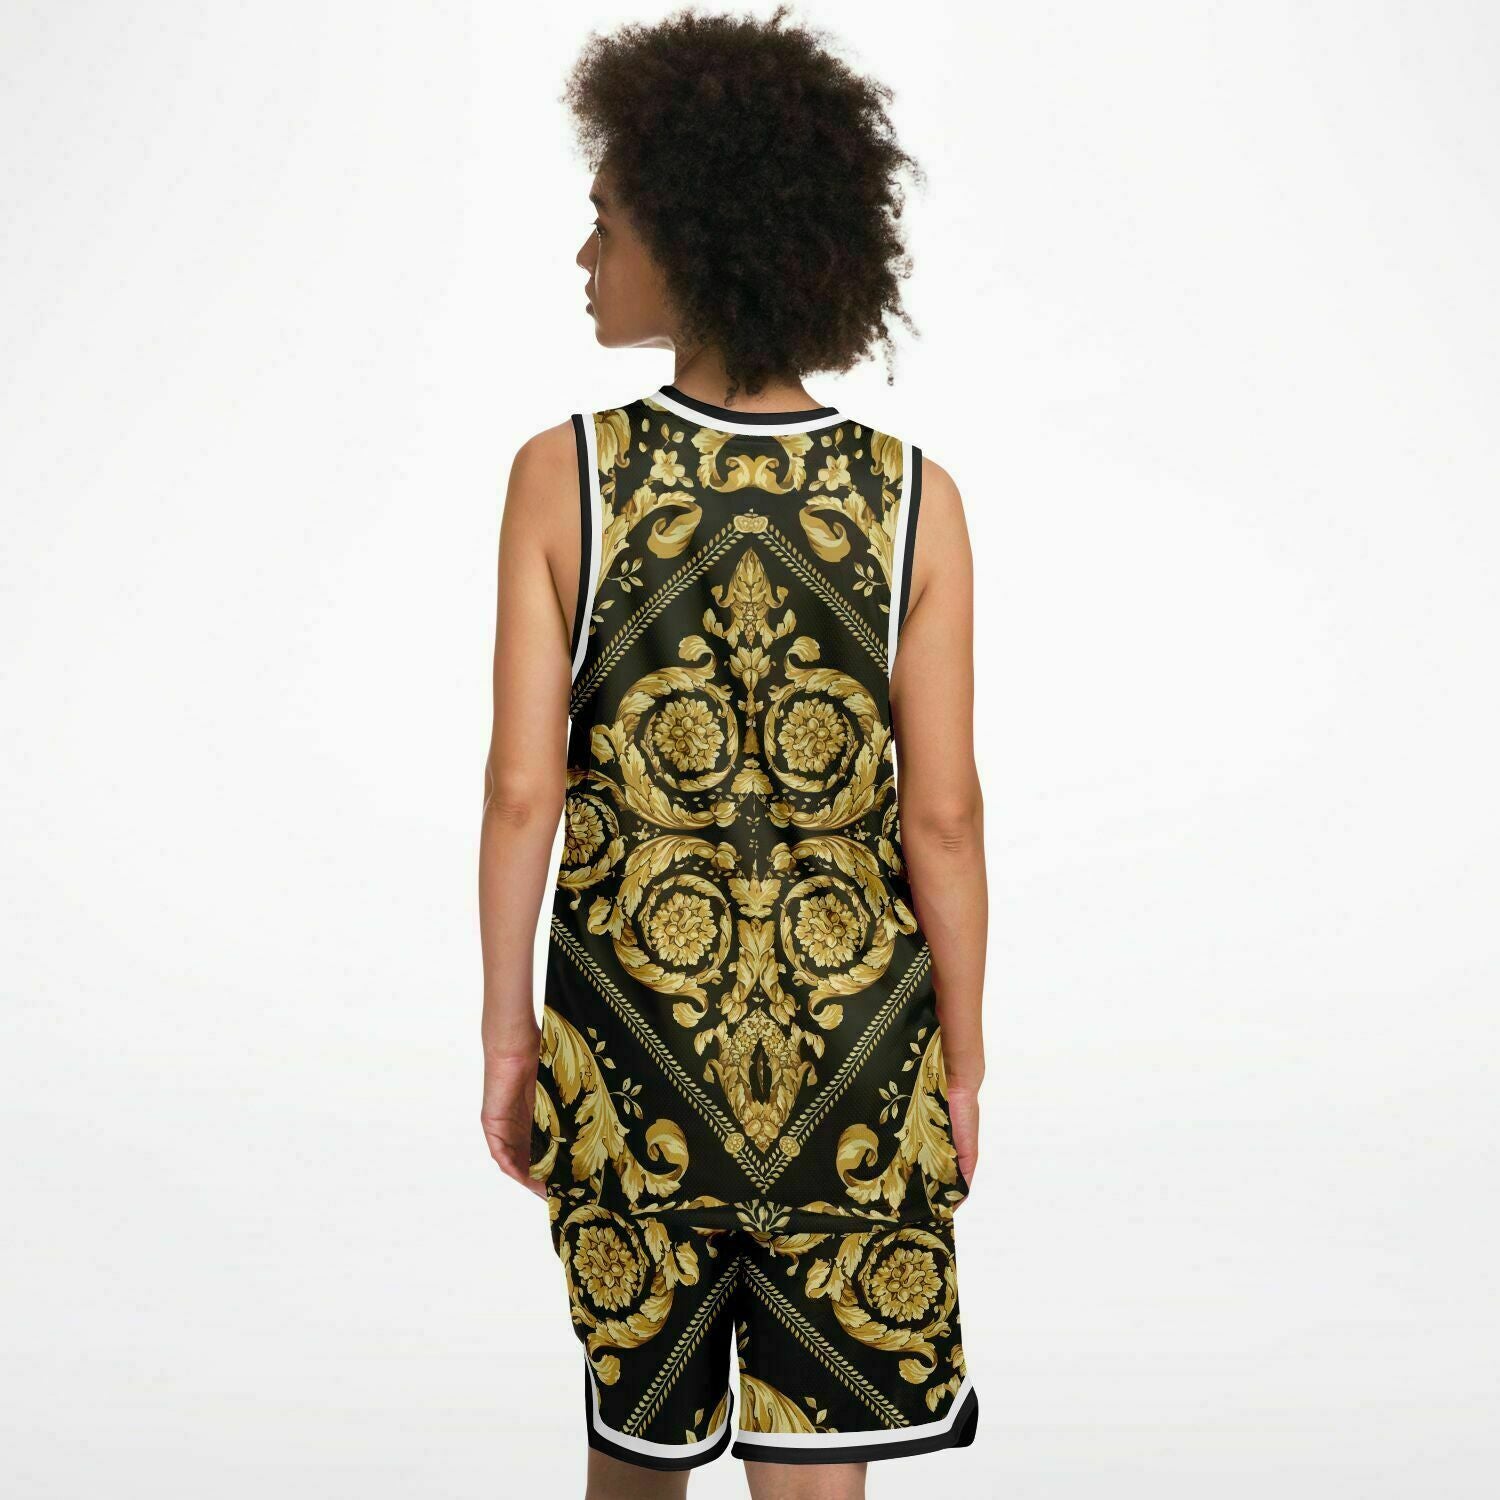 Baroque Print Basketball Set Jersey and Shorts - HipHatter